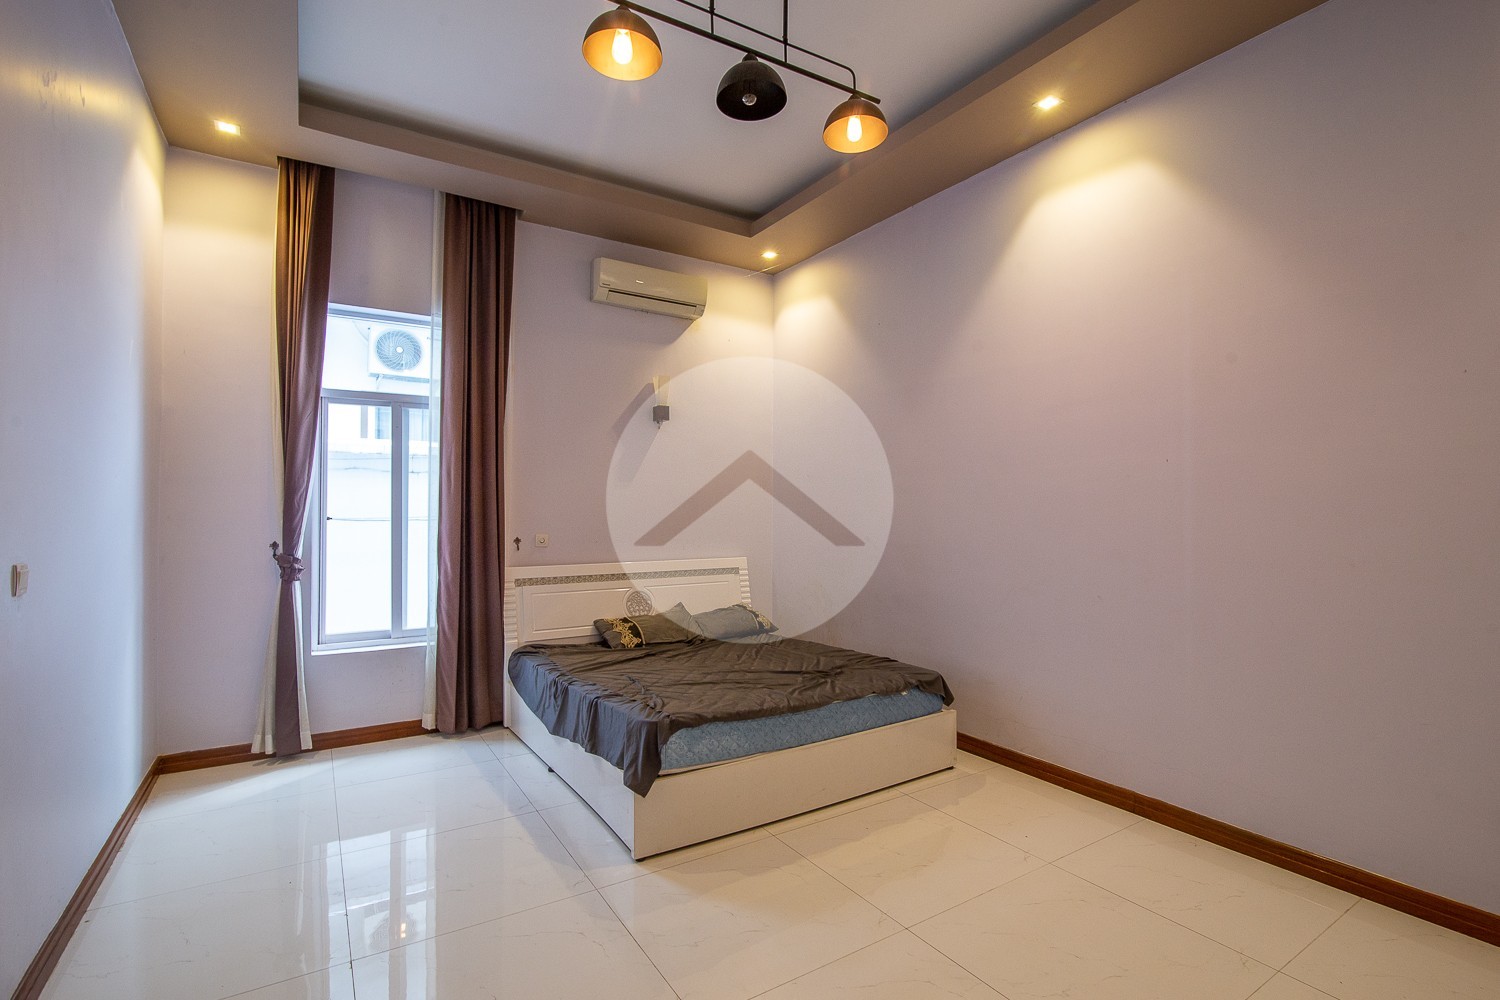 7 Bedroom Villa For Rent - Tonle Bassac, Phnom Penh thumbnail